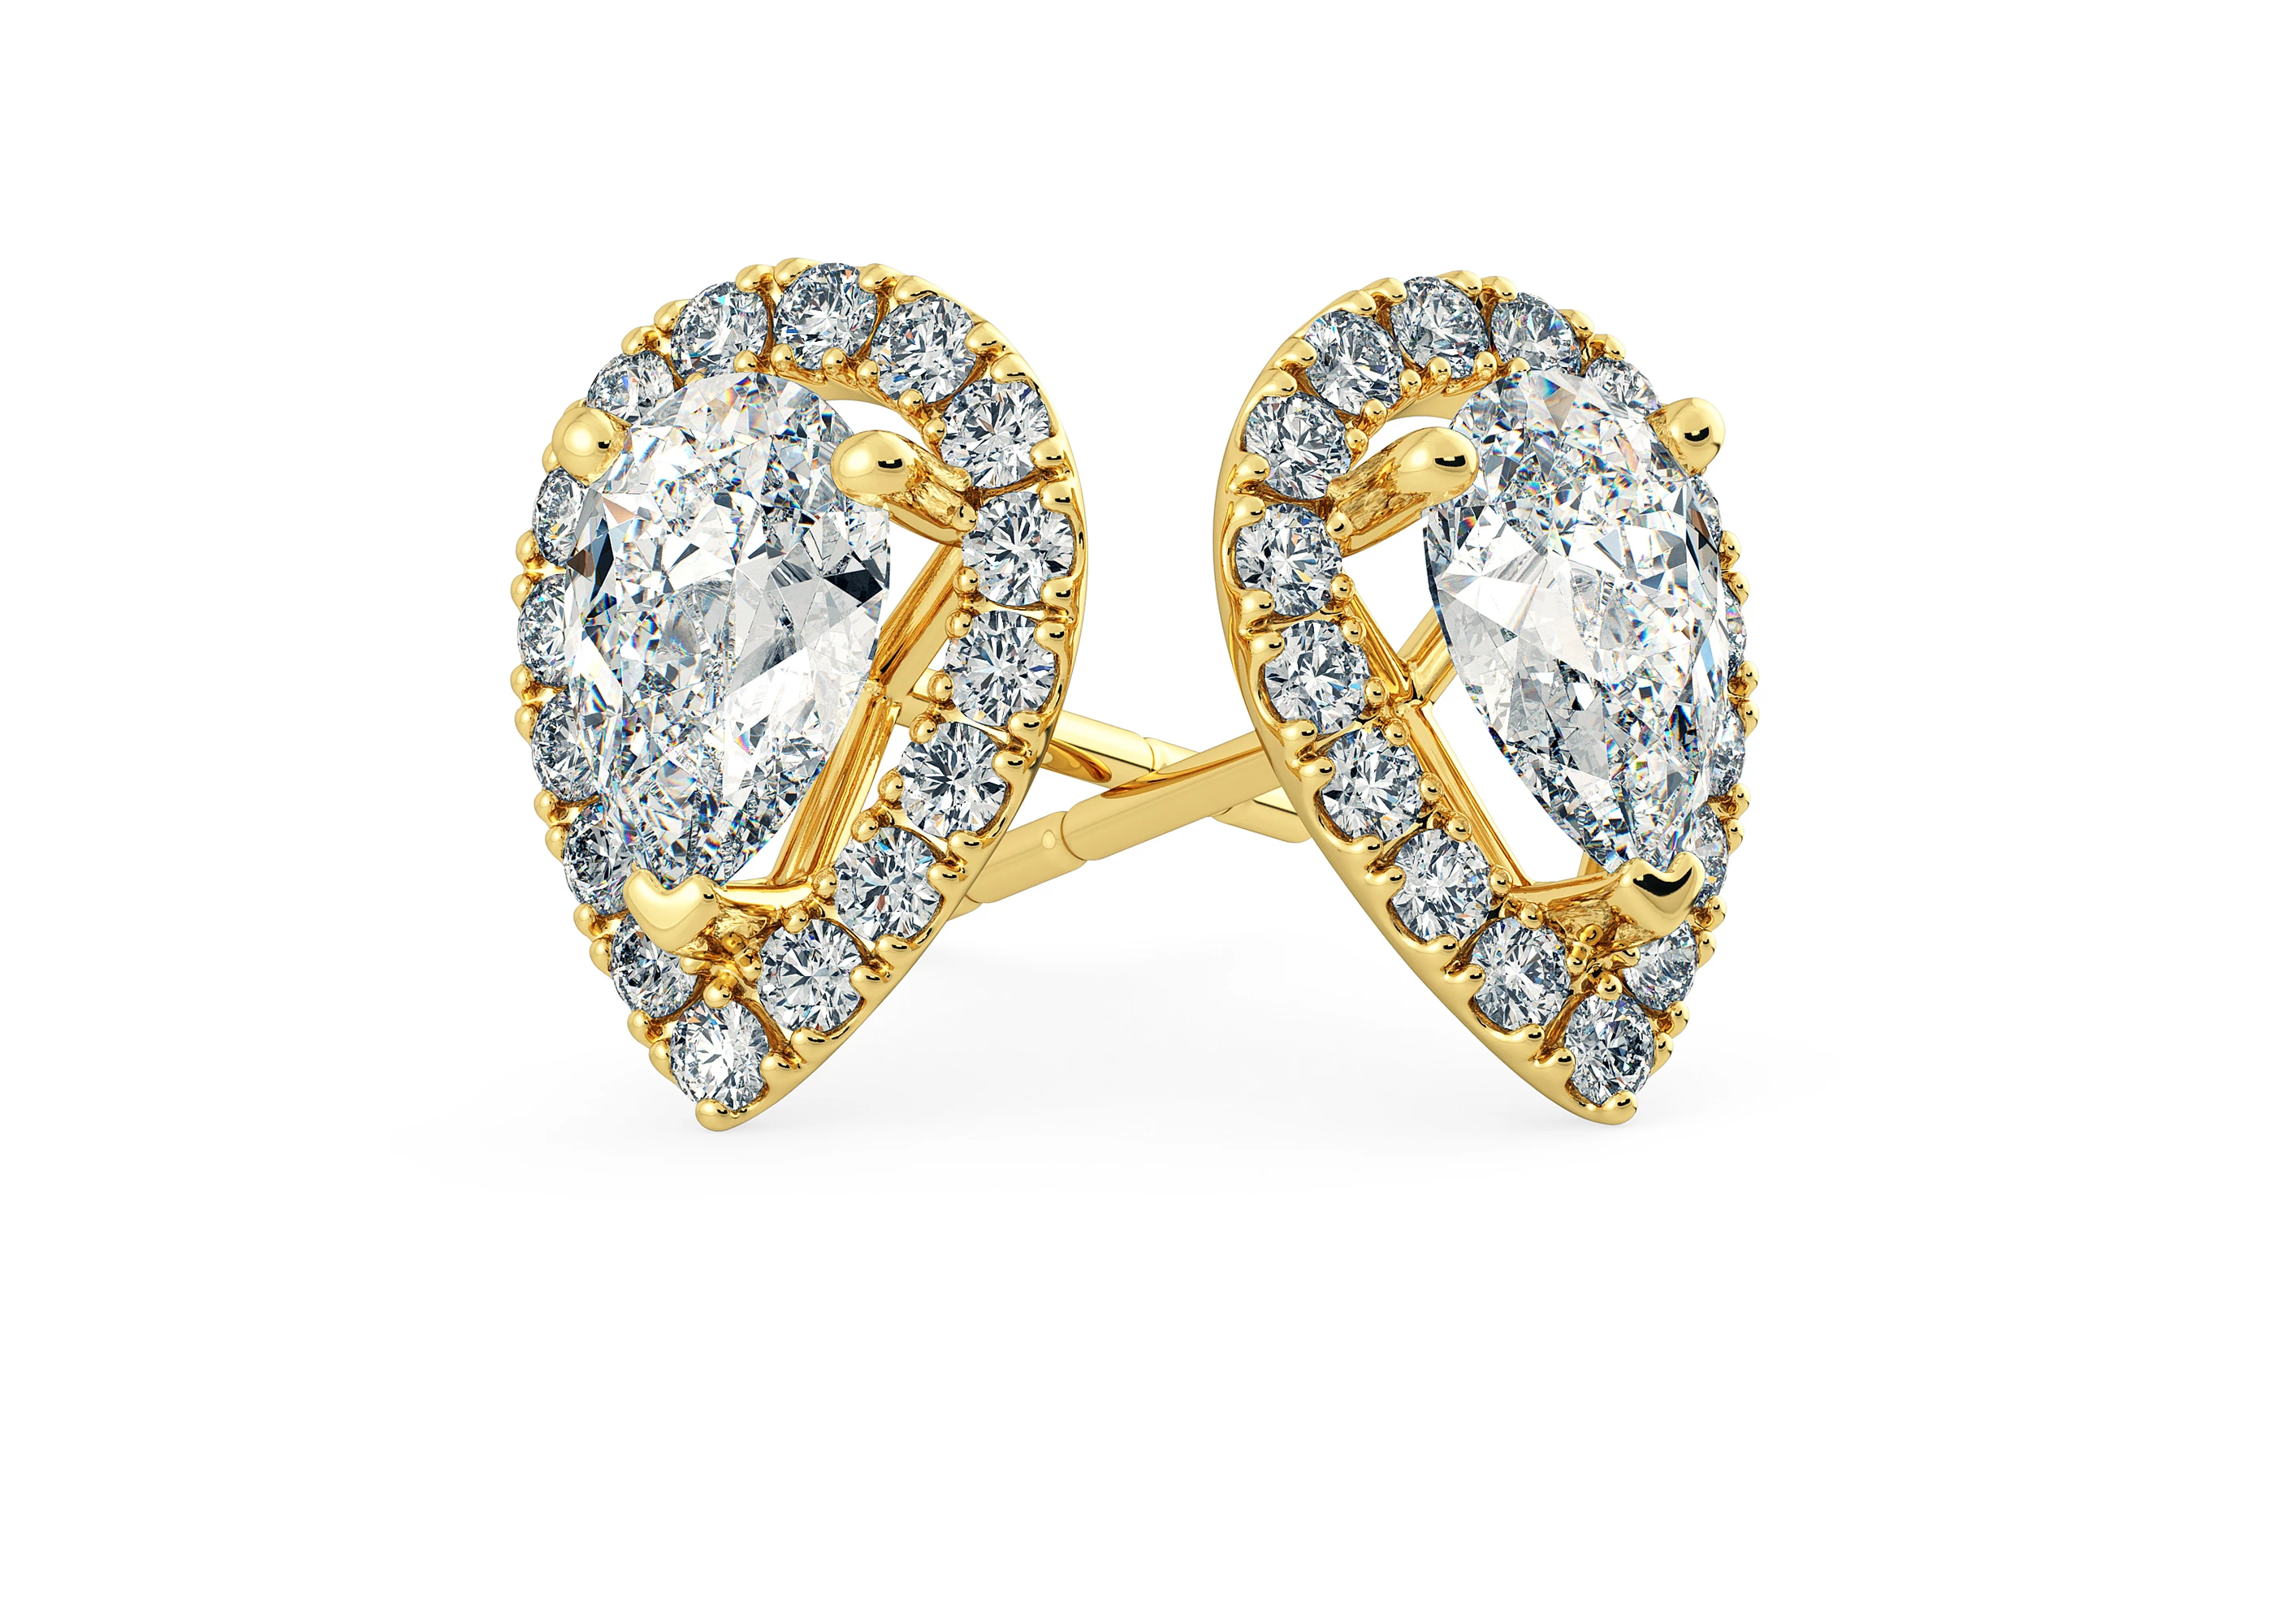 Bijou Pear Diamond Stud Earrings in 18K Yellow Gold with Screw Backs